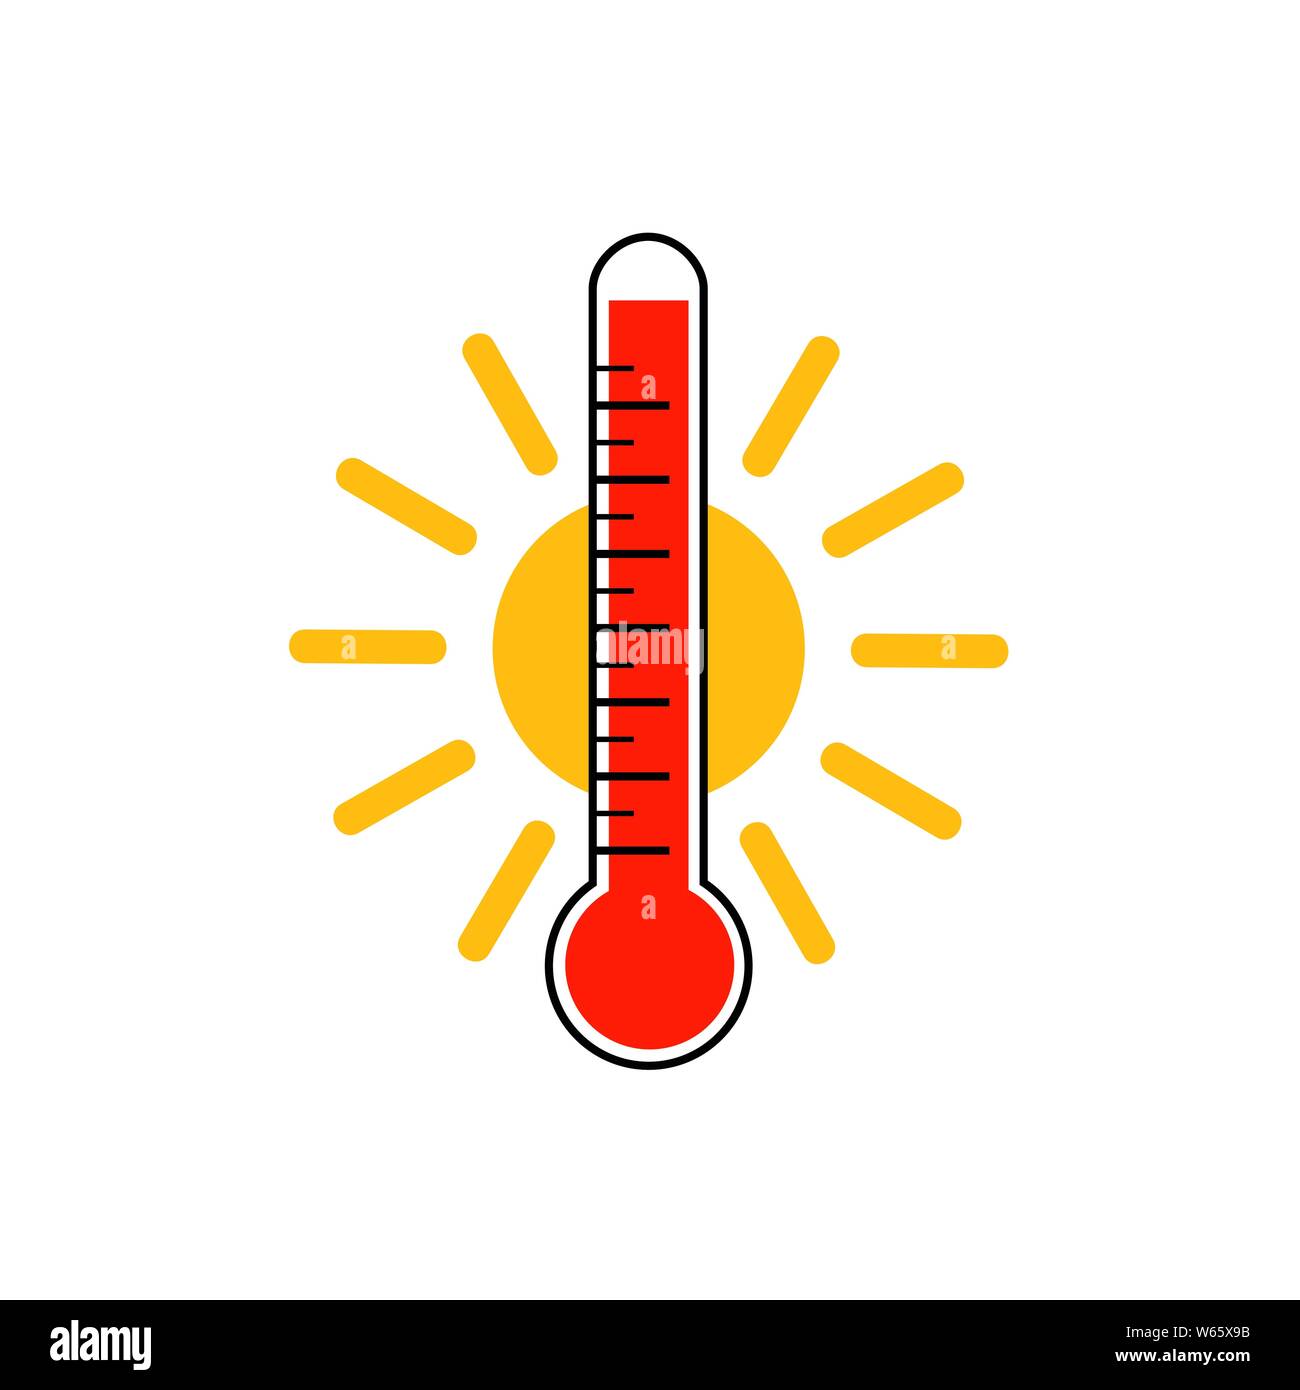 https://c8.alamy.com/comp/W65X9B/heat-thermometer-icon-and-sun-symbol-vector-illustration-eps10-W65X9B.jpg